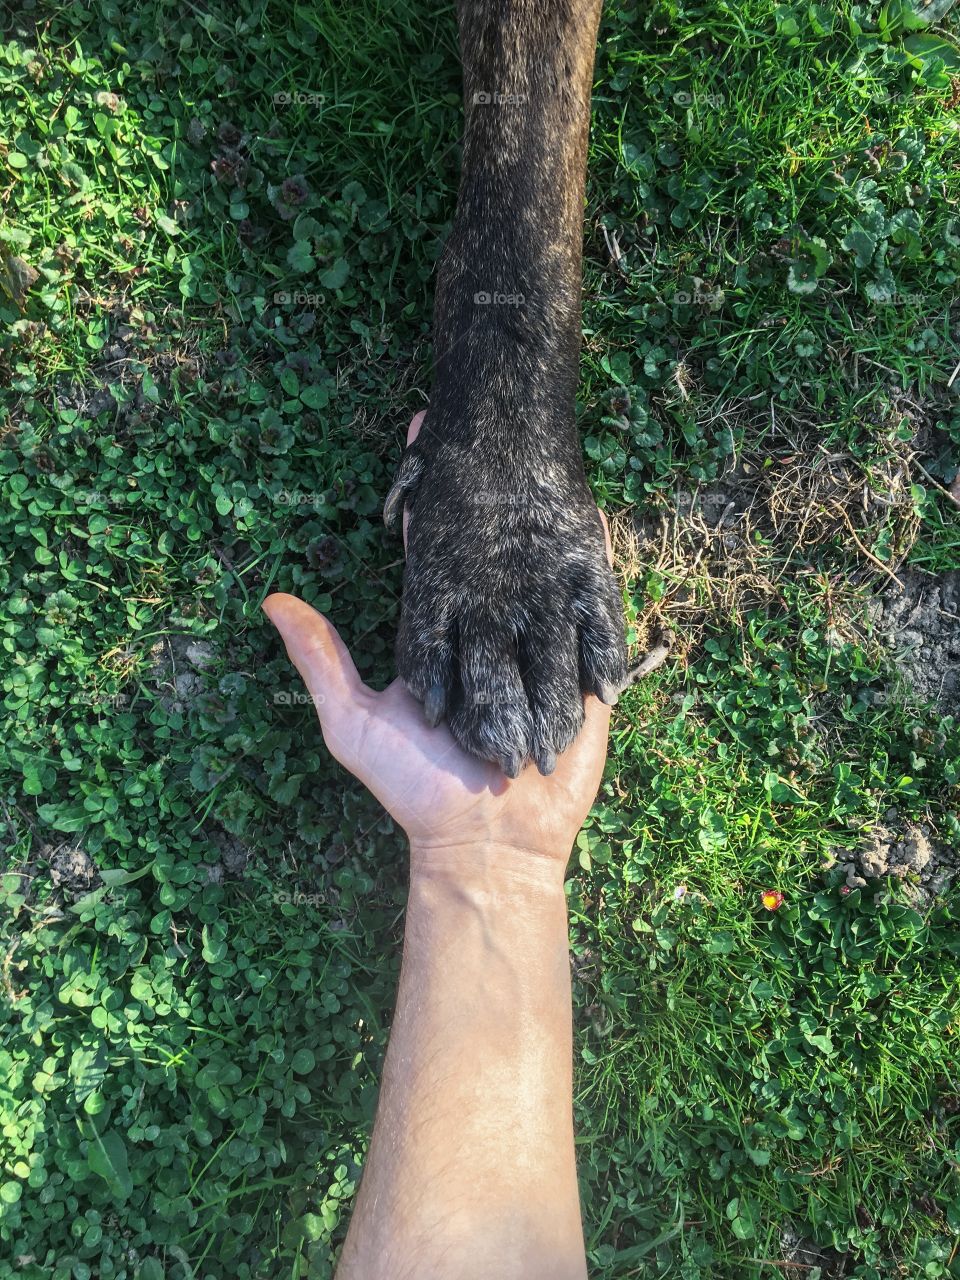 Dog - human bond ❤️